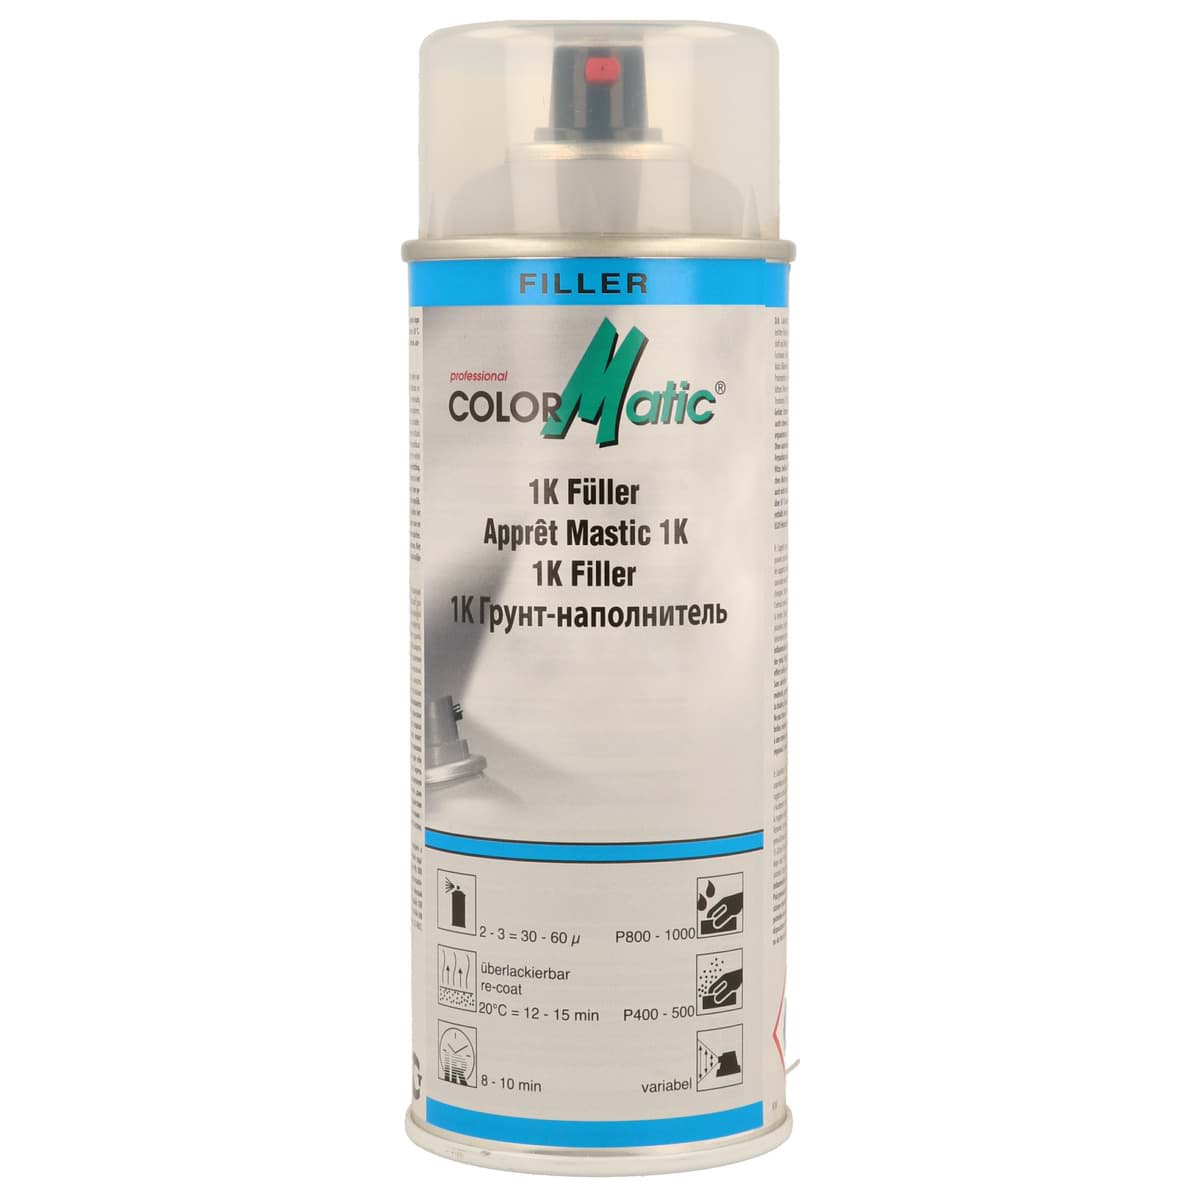 ColorMatic Professional 1K Füller grau 874987 400ml resmi